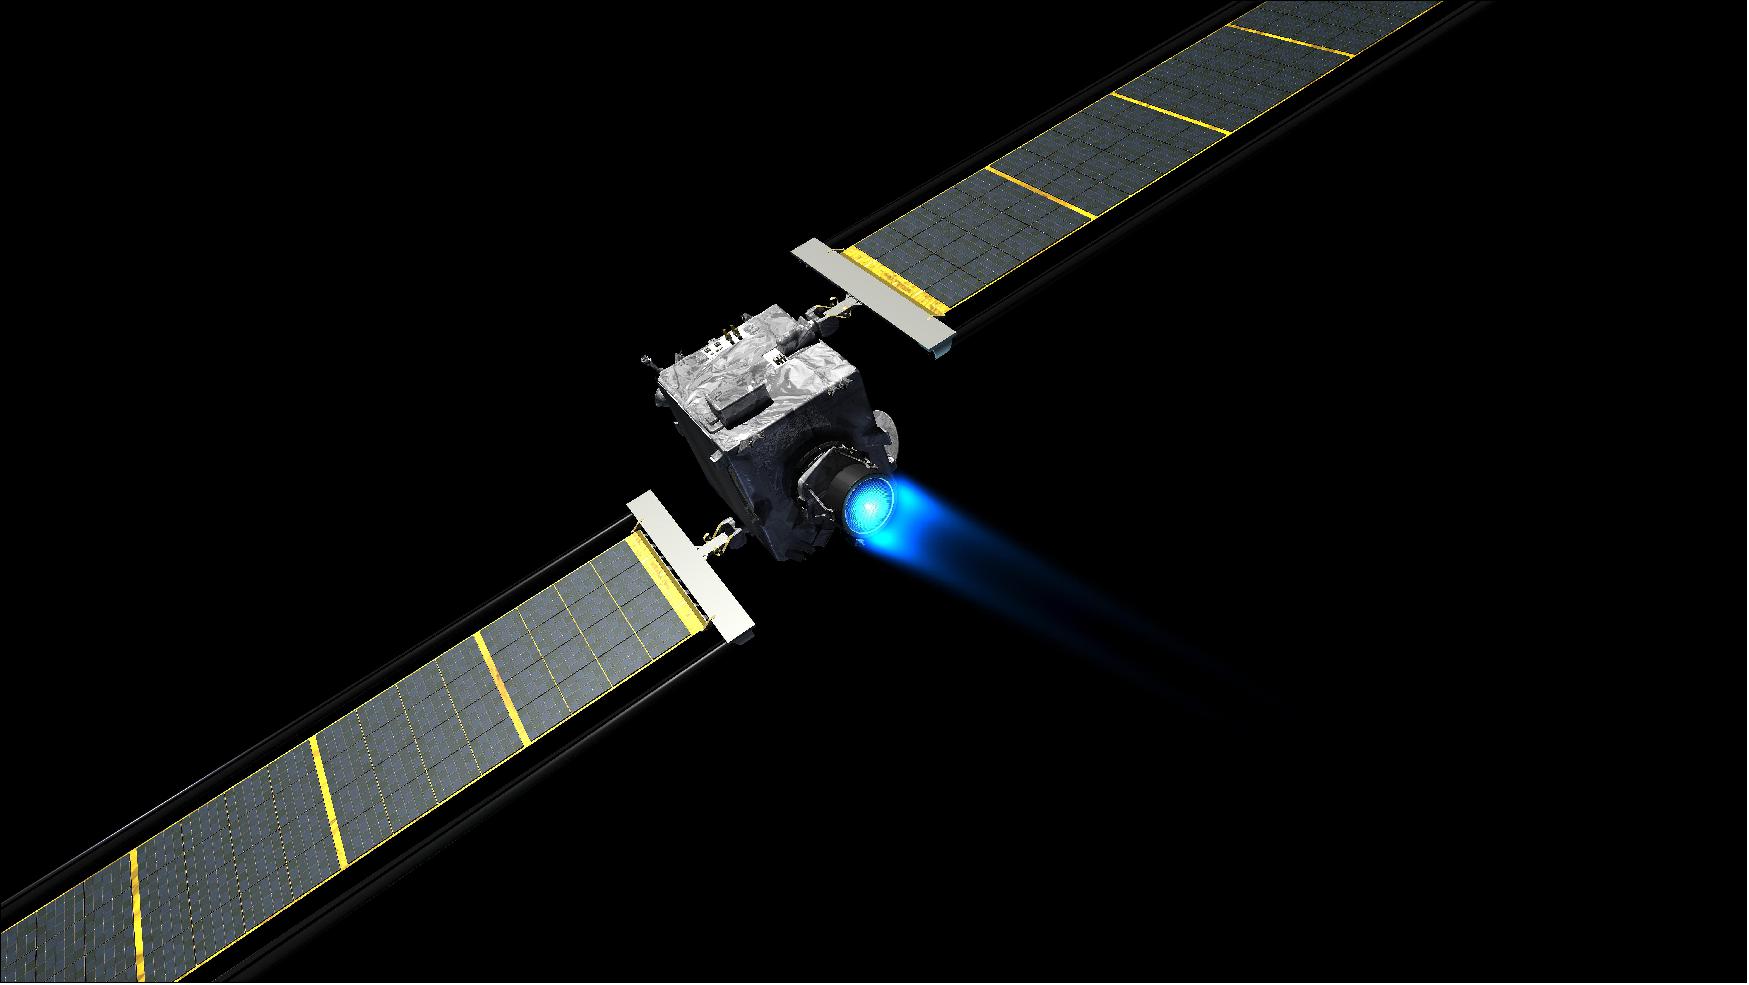 Figure 8: Illustration of the deployed DART spacecraft (image credit: JHU/APL)